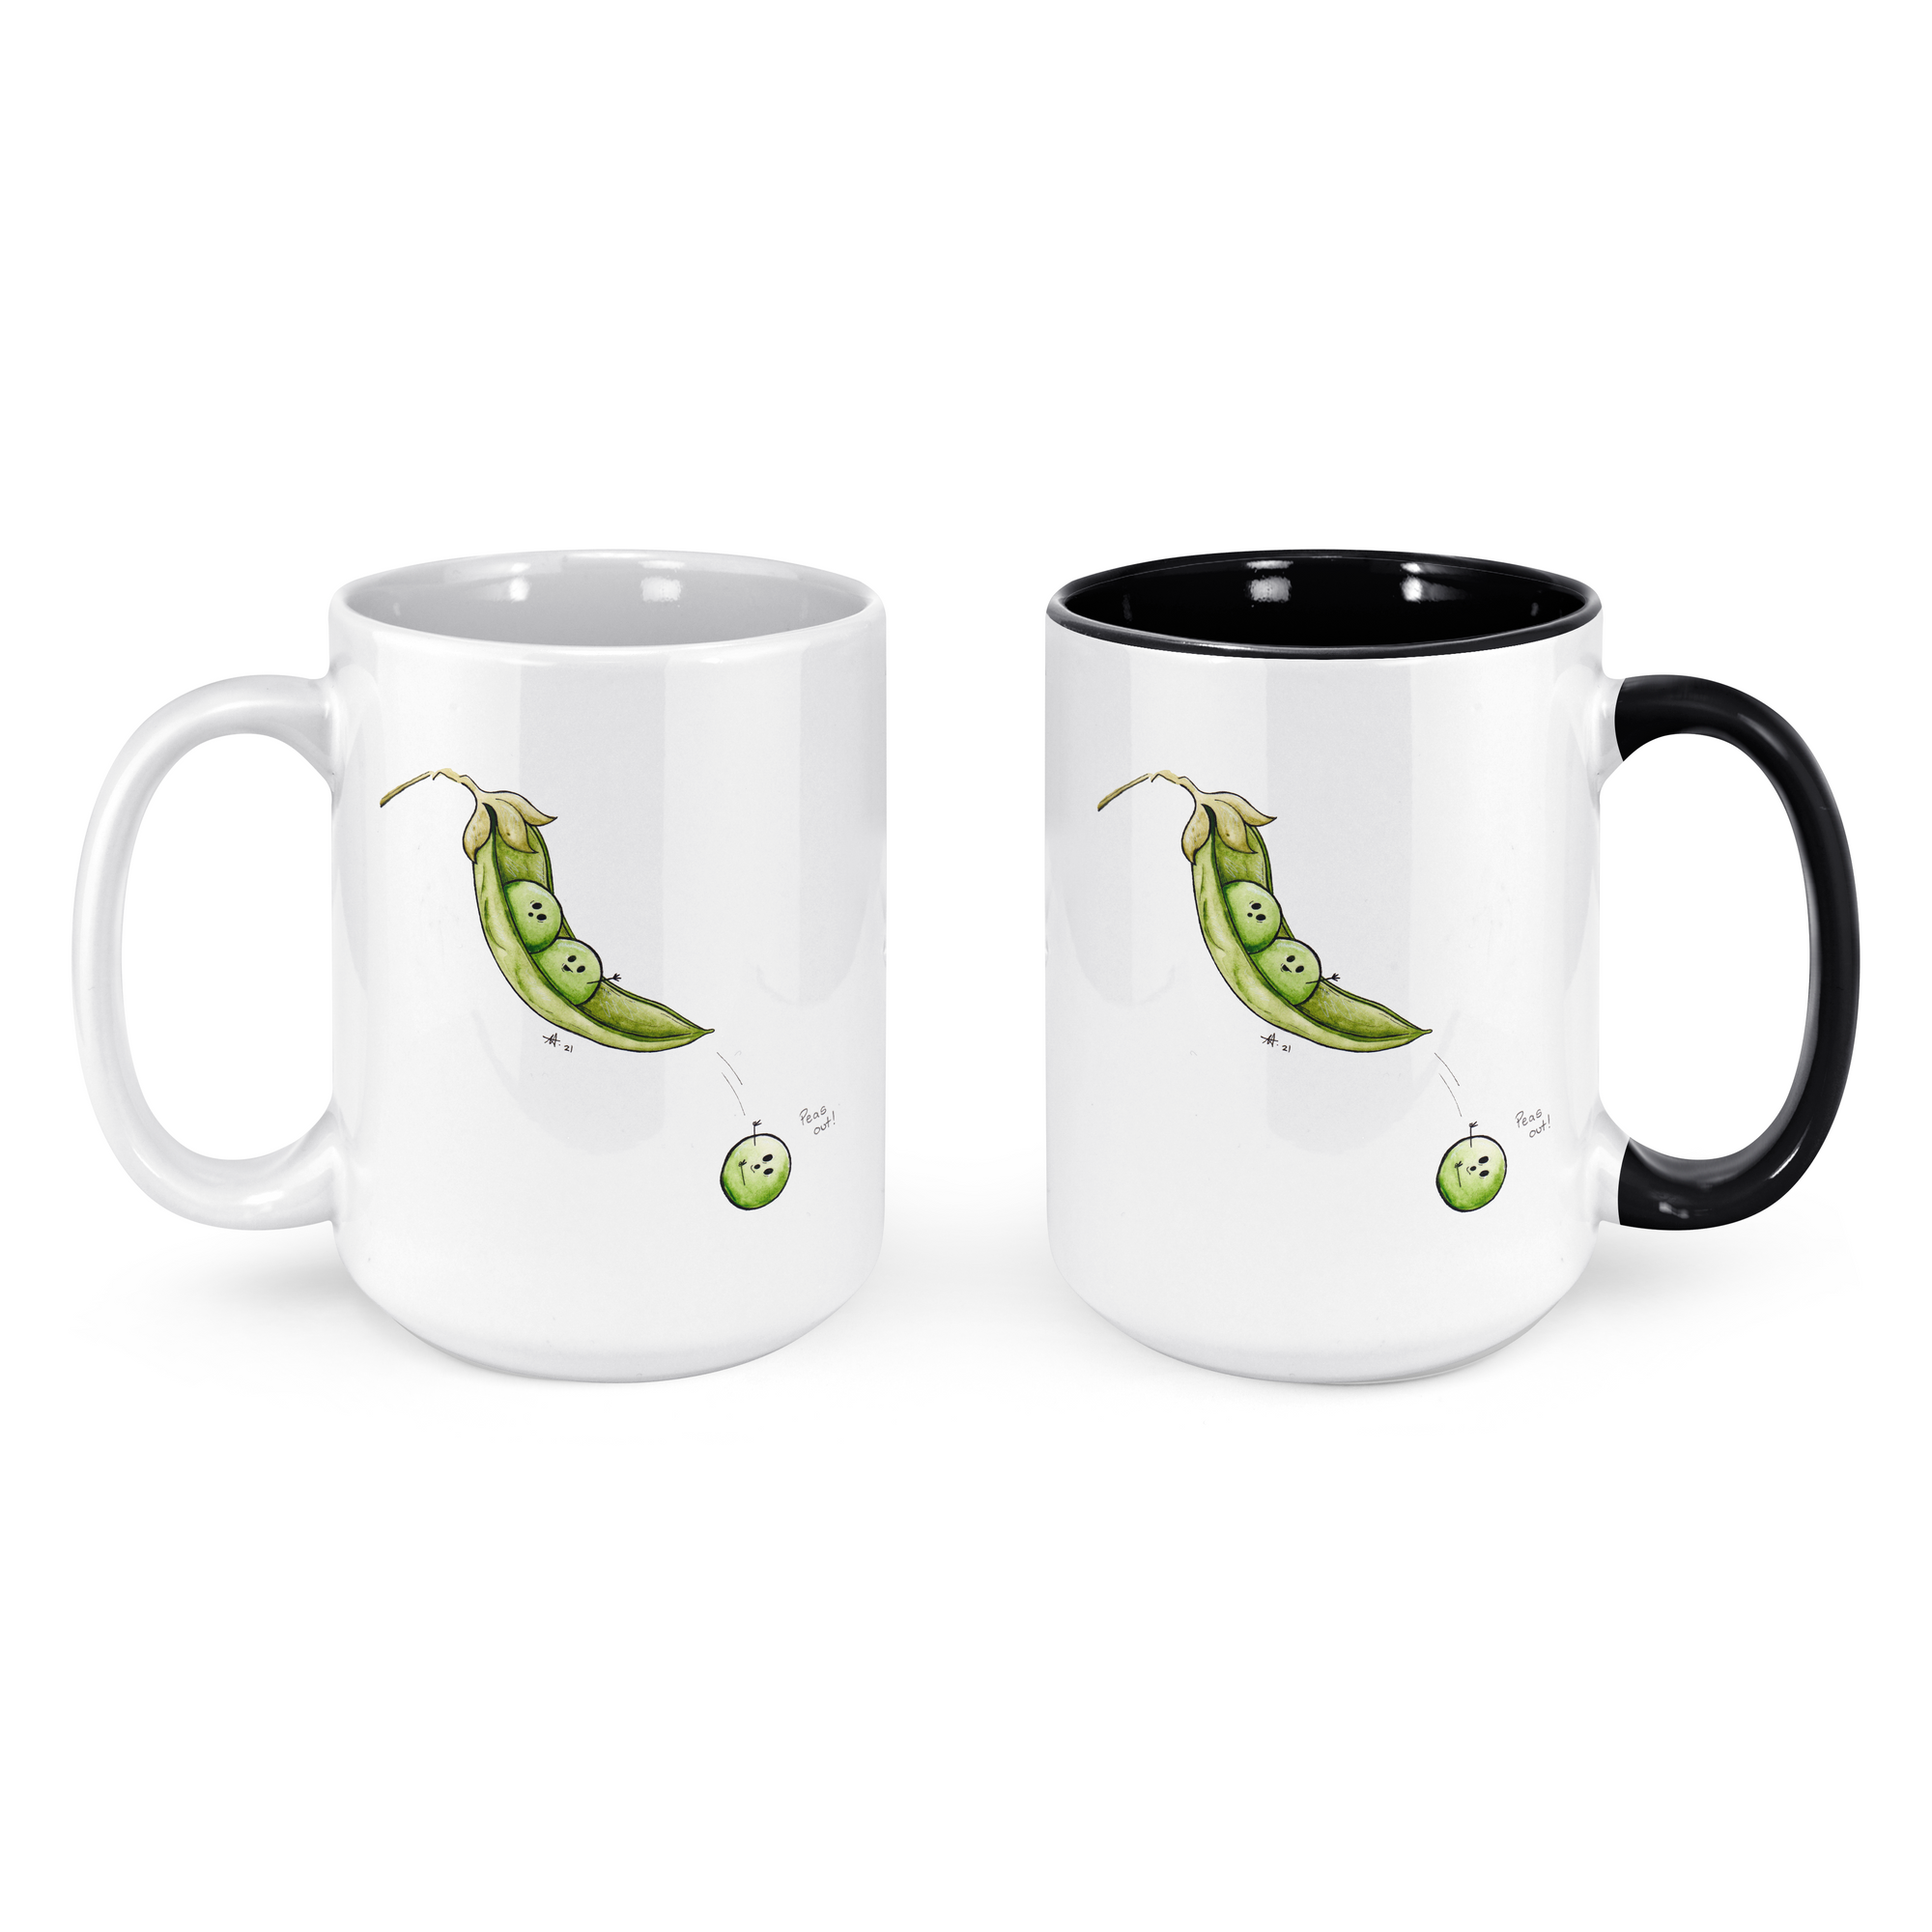 "Peas out!" - 15oz Coffee Mug